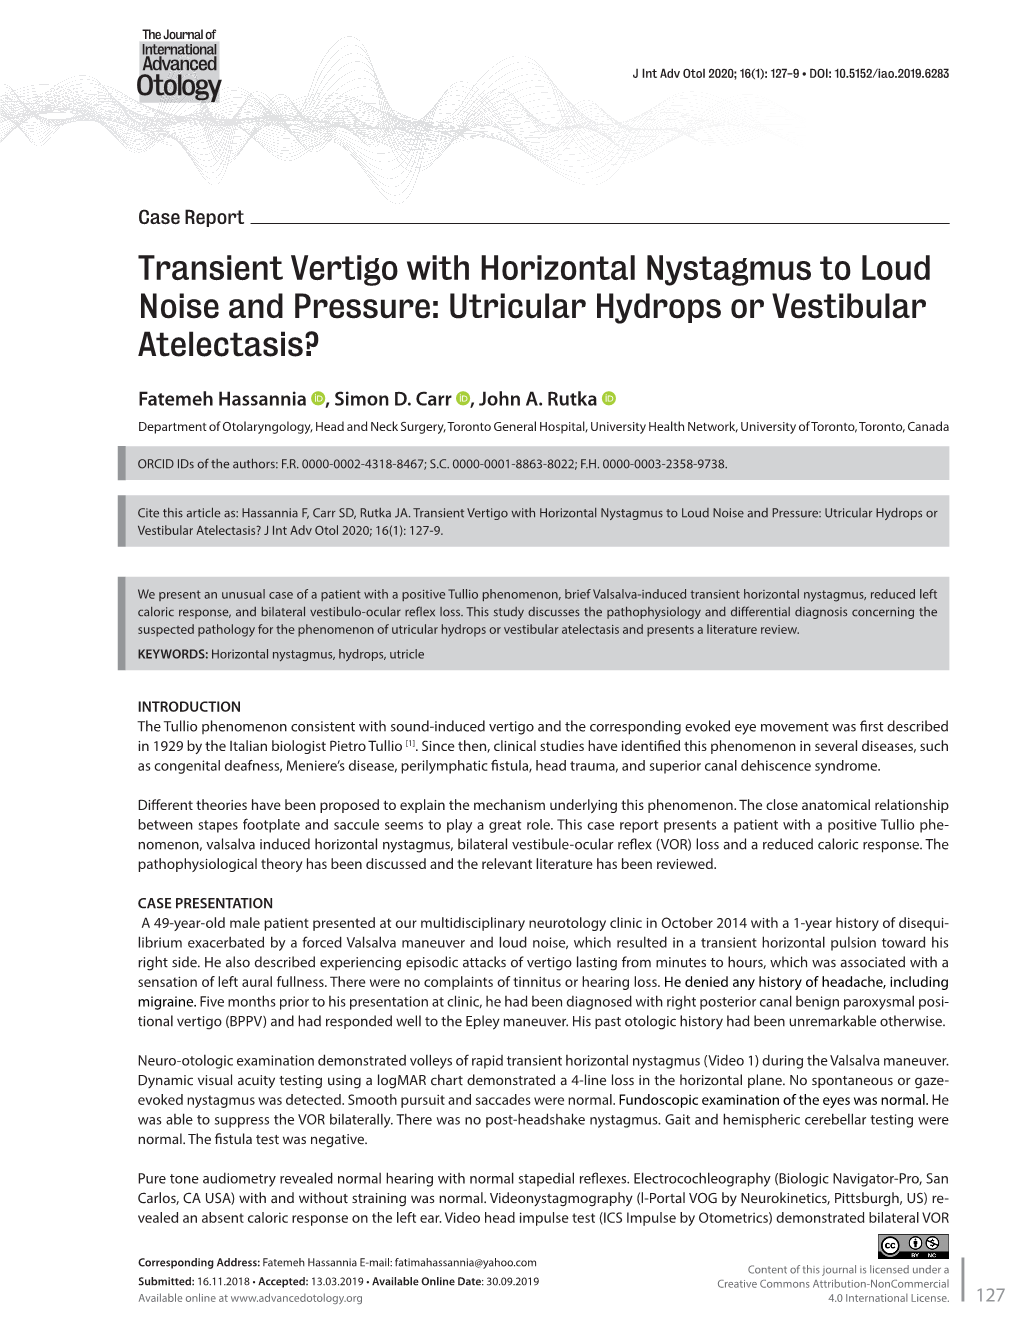 Transient Vertigo with Horizontal Nystagmus to Loud Noise and Pressure: Utricular Hydrops Or Vestibular Atelectasis?